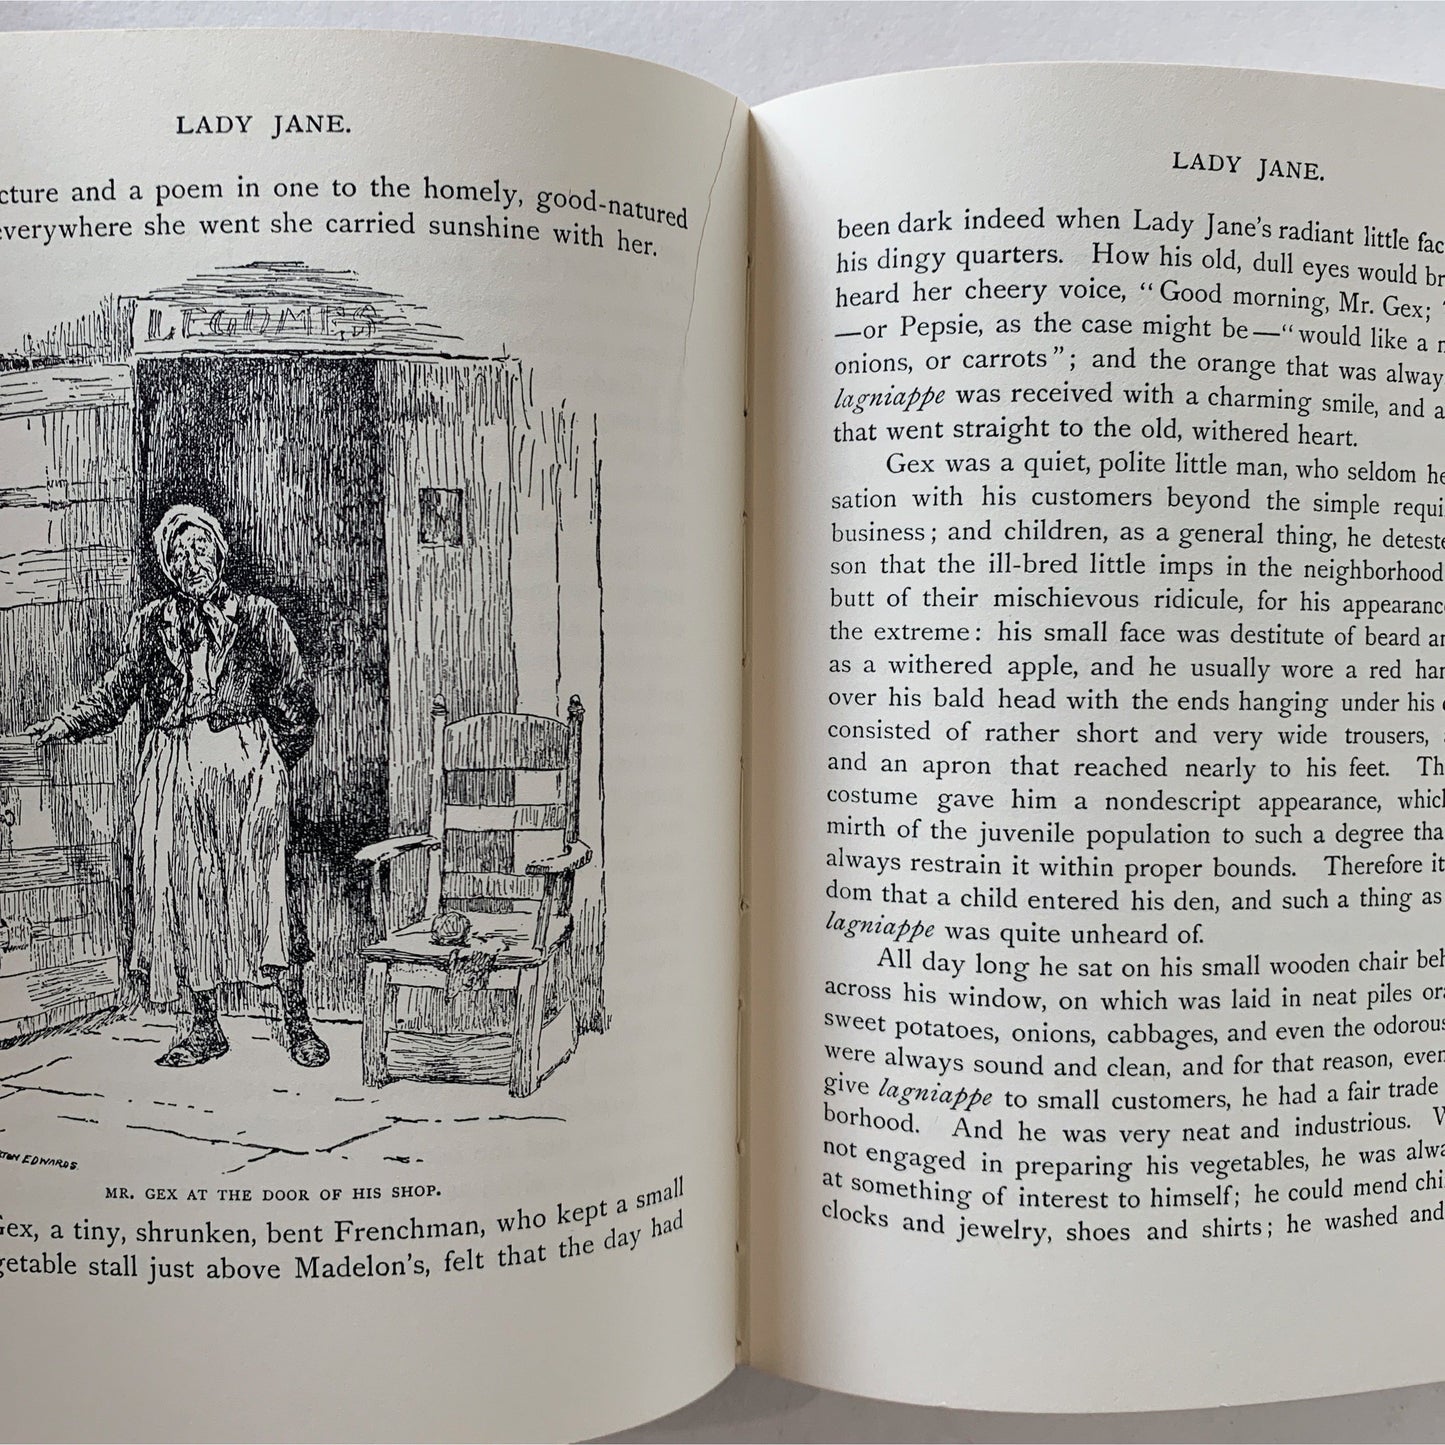 Lady Jane, Mrs. C V Jamison, Illustrated Hardcover Edition Children's Book